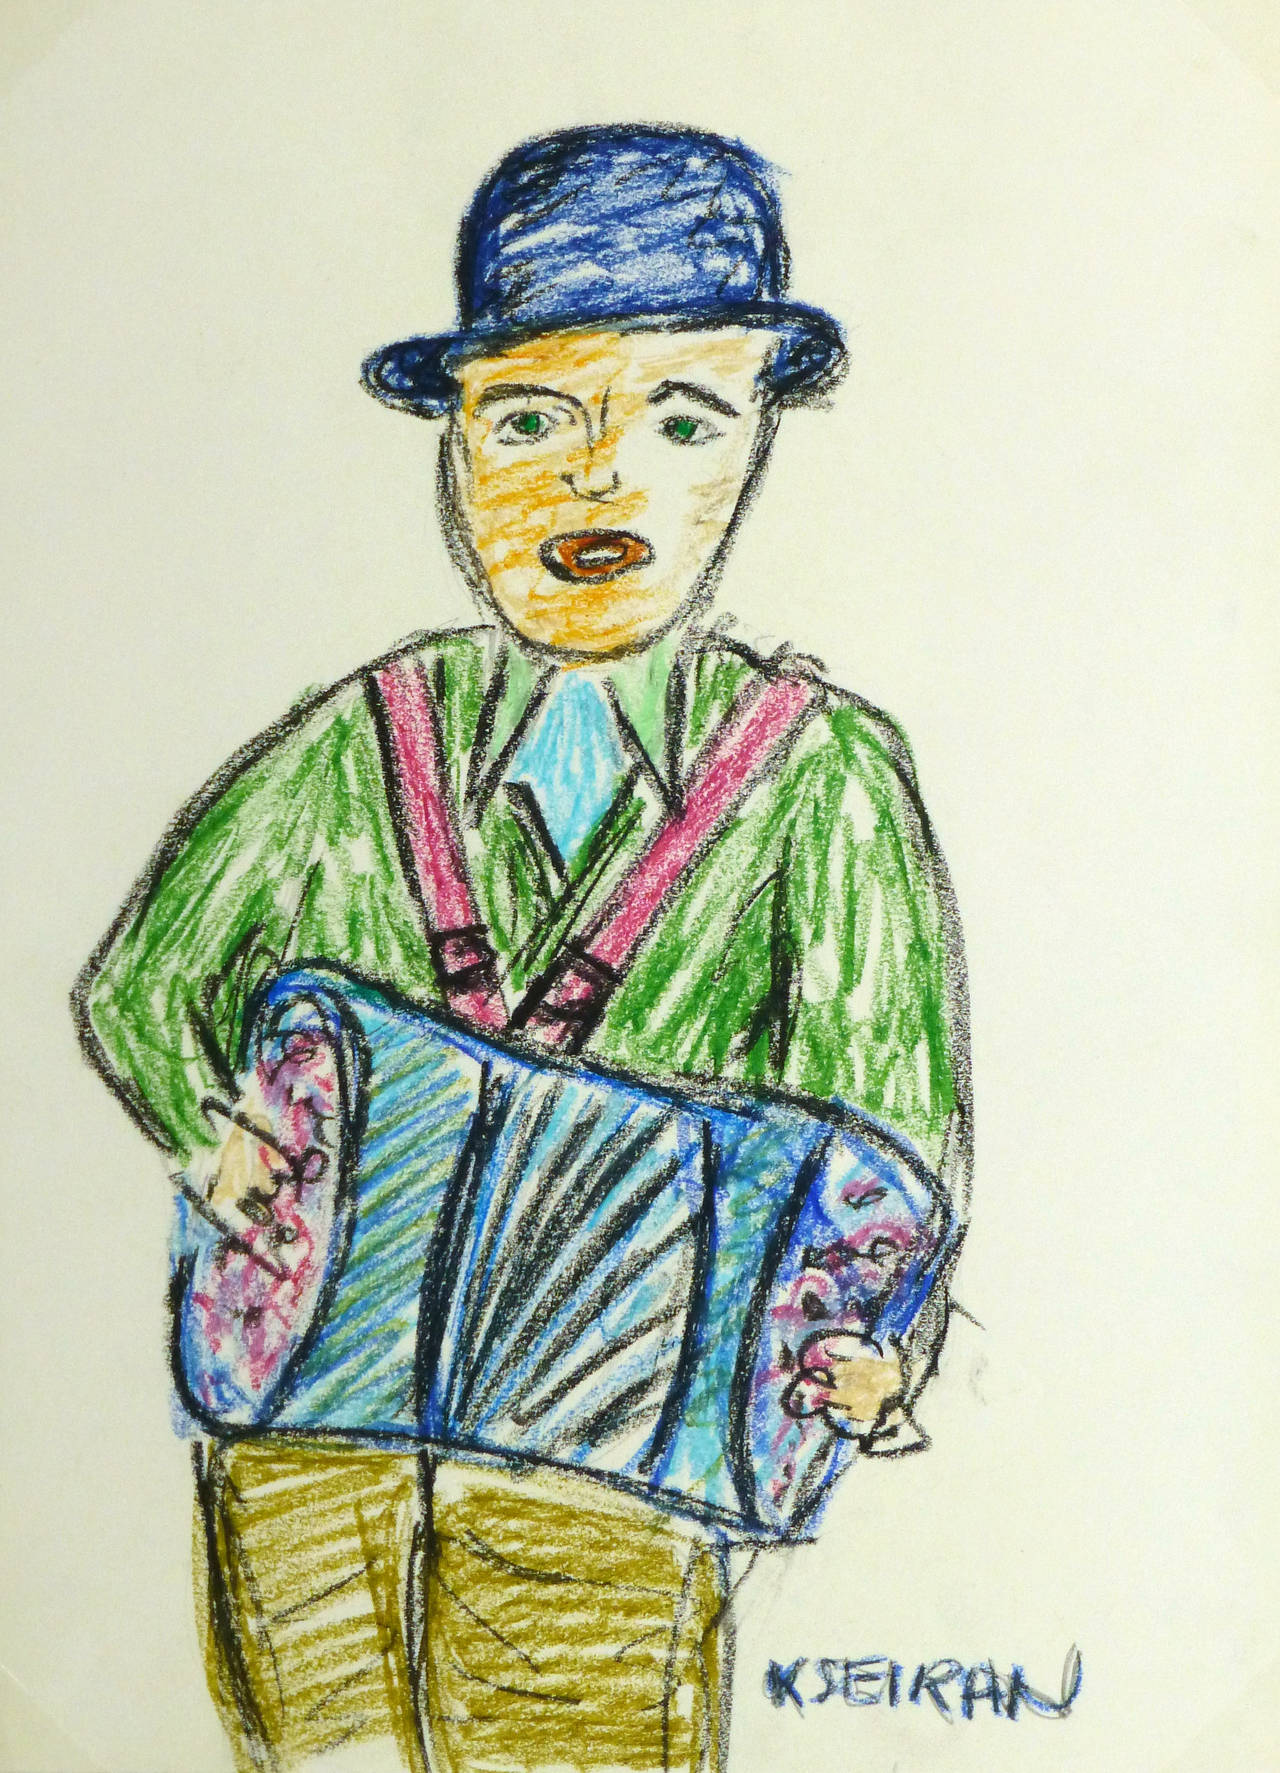 Kseiran Portrait - French Oil Pastel - The Accordion Man